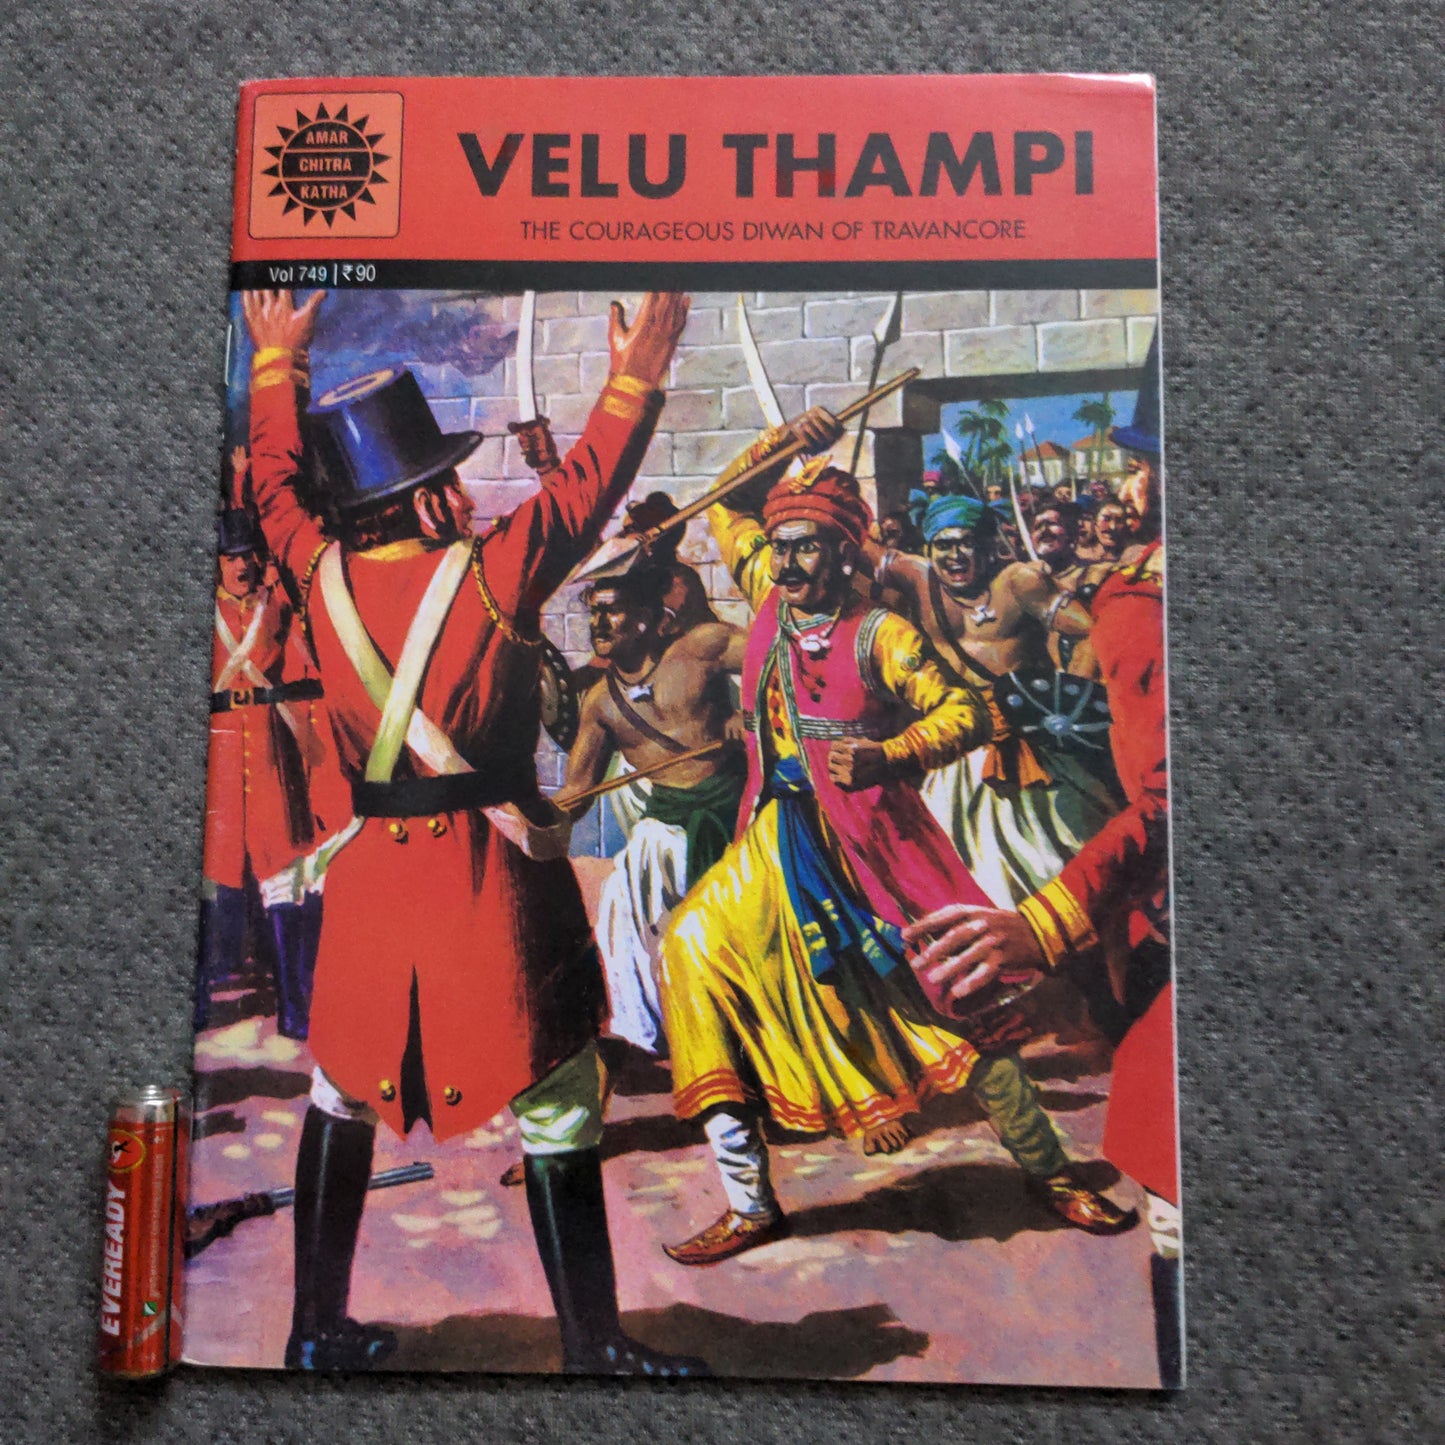 Velu Thampi - The Courageous Diwan of Tranavancore